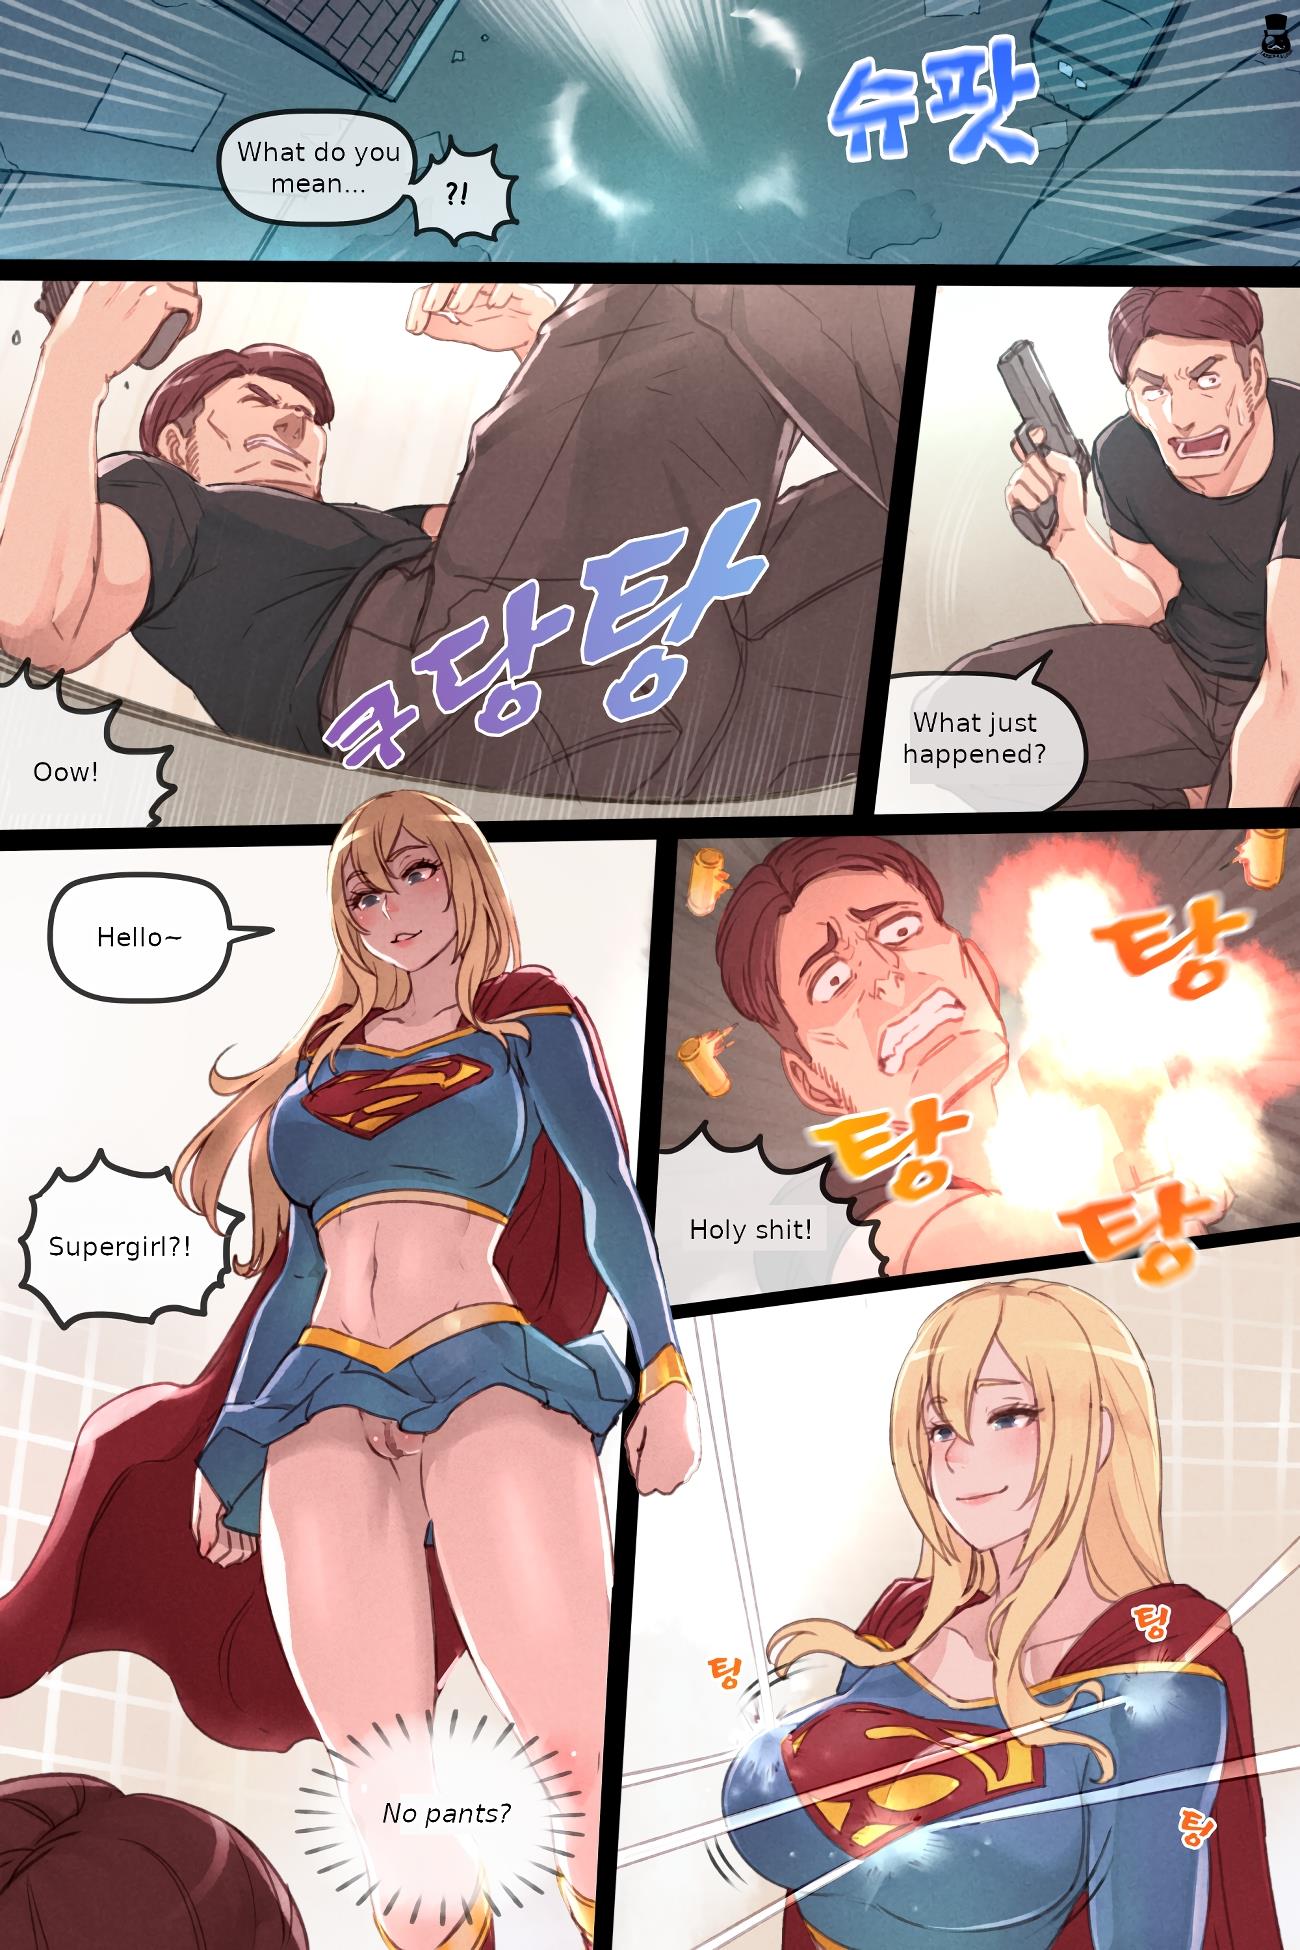 Supergirl’s Secret Trouble [Mr.takealook]